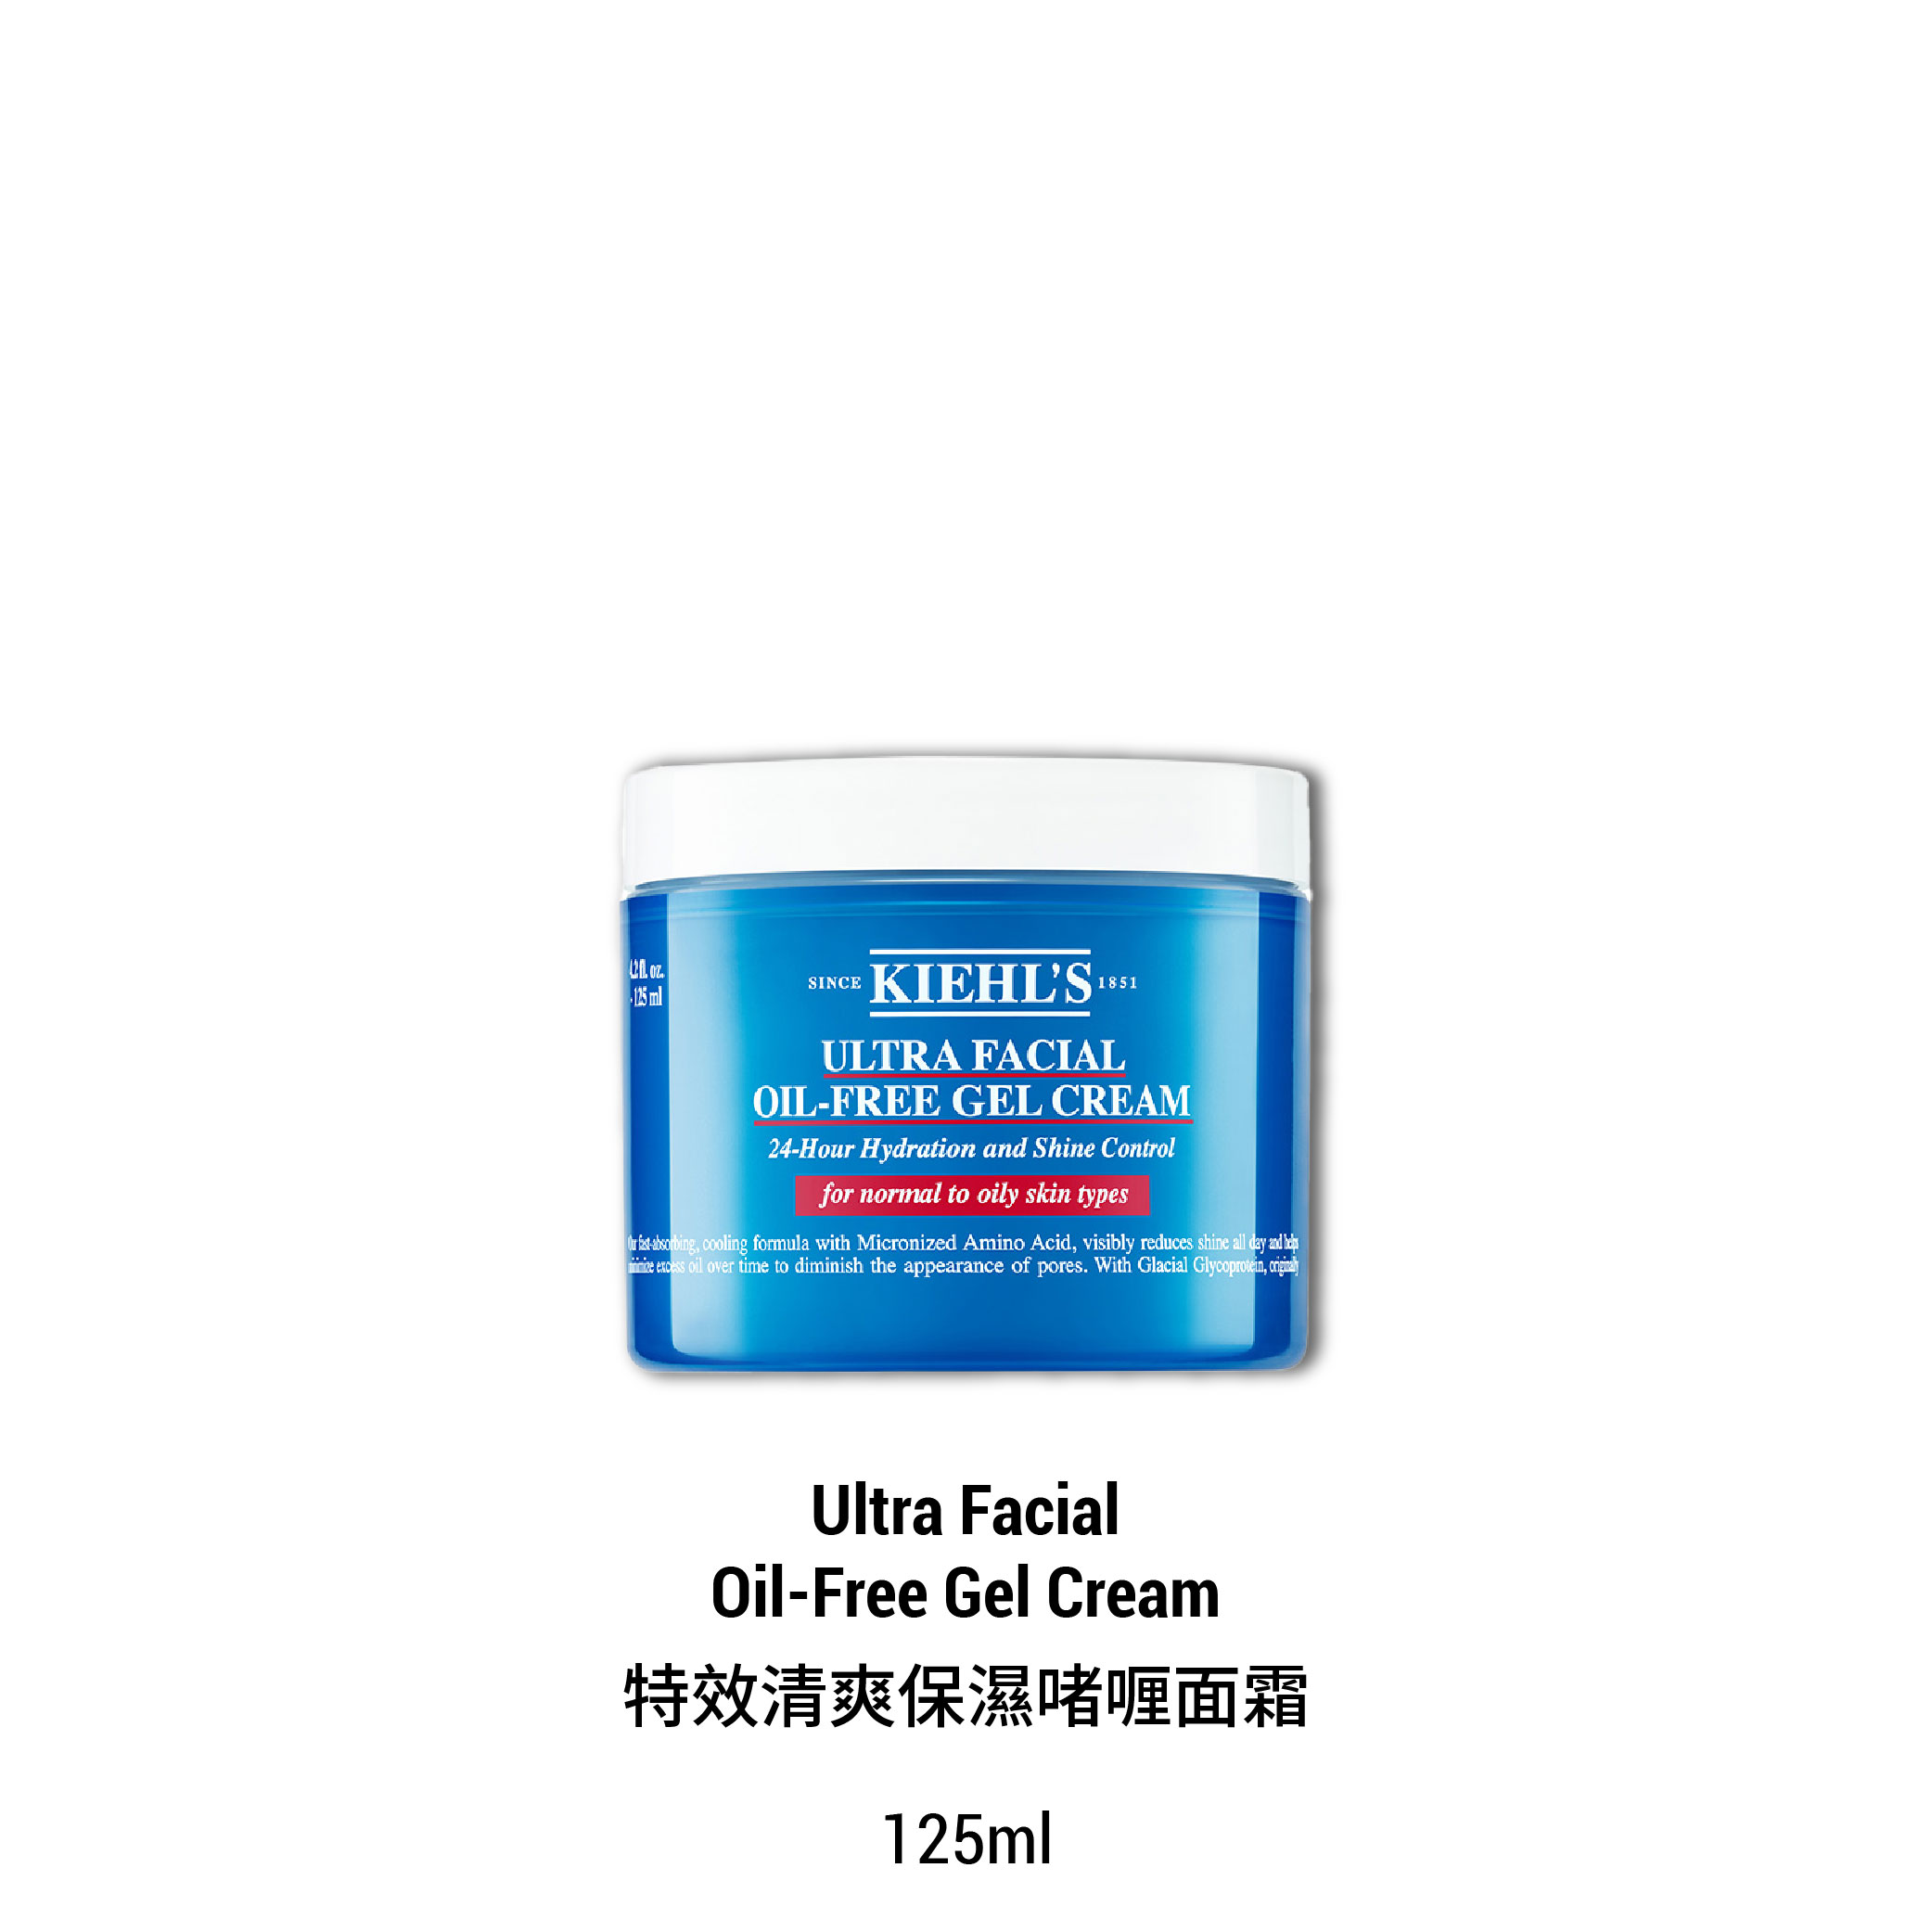 Ultra Facial Oil-Free Gel Cream Special